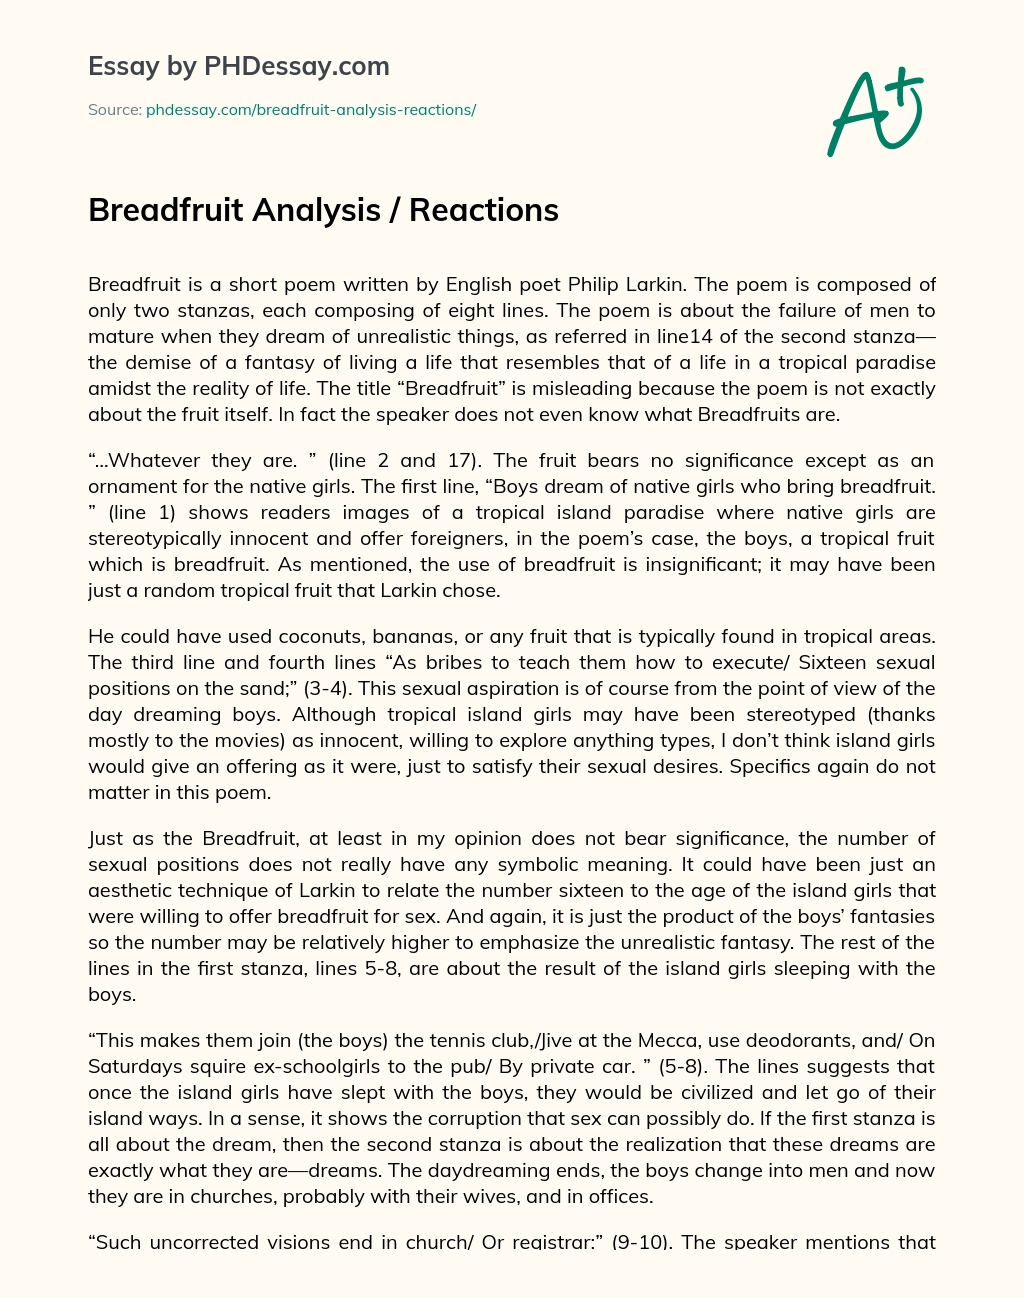 Breadfruit Analysis / Reactions essay